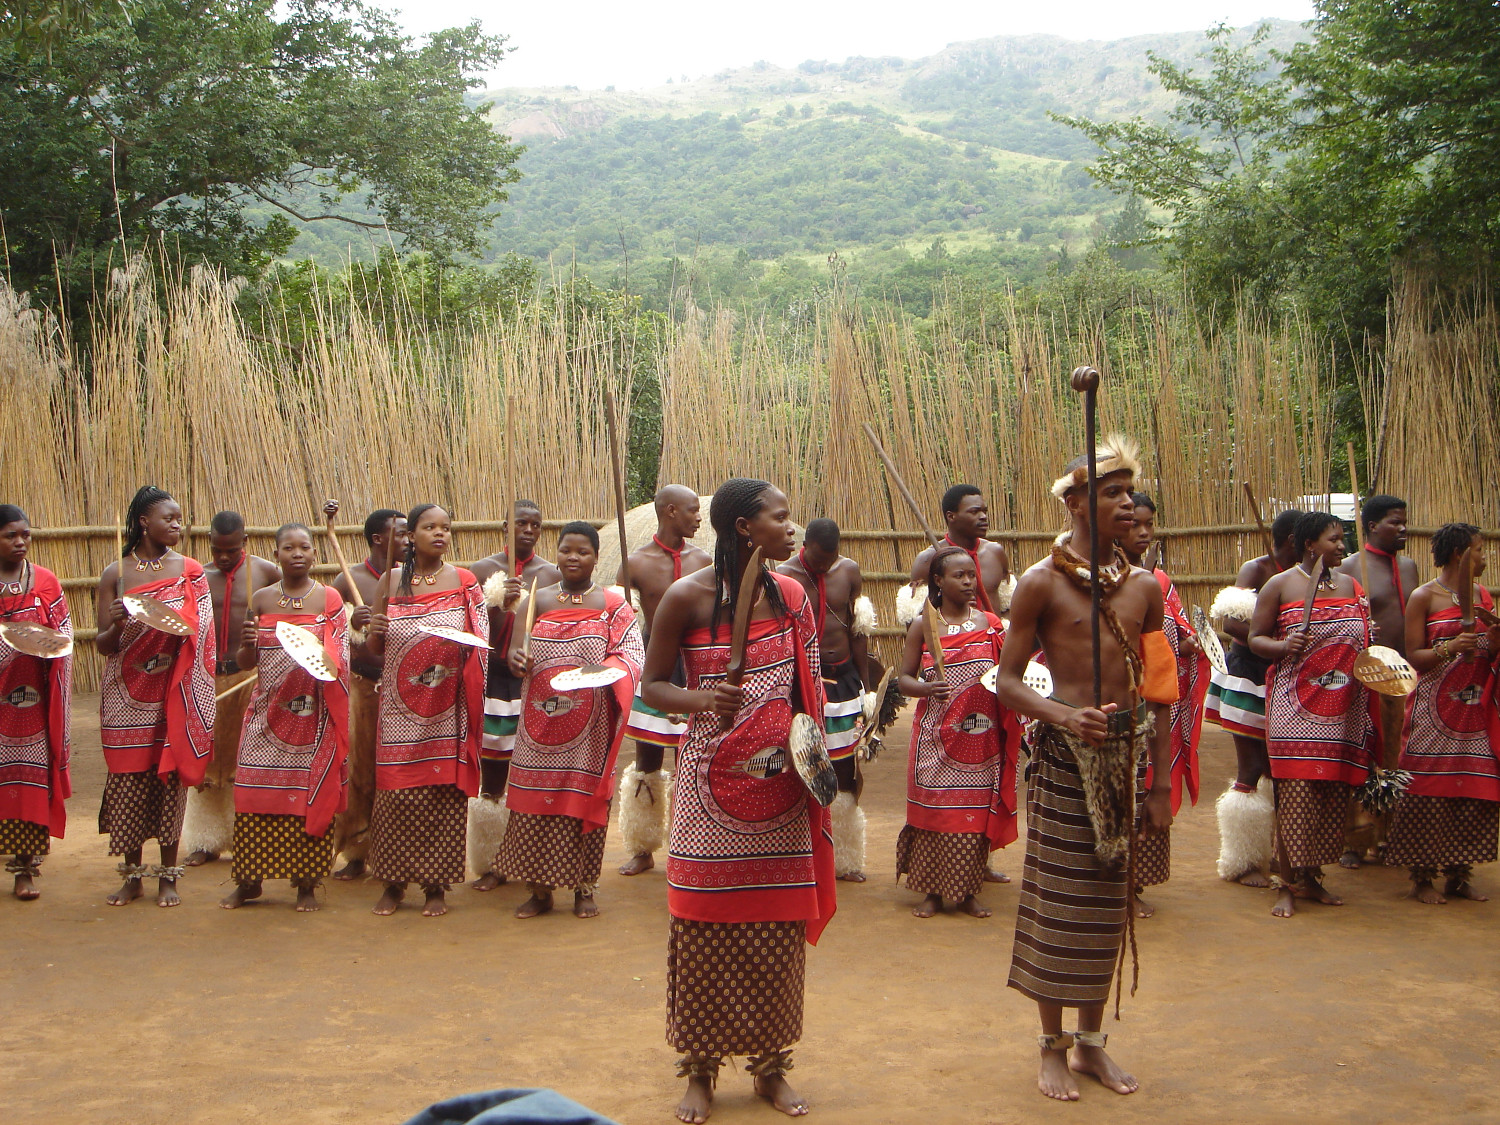 tribu qui danse au Swaziland destinations en dehors des sentiers battus